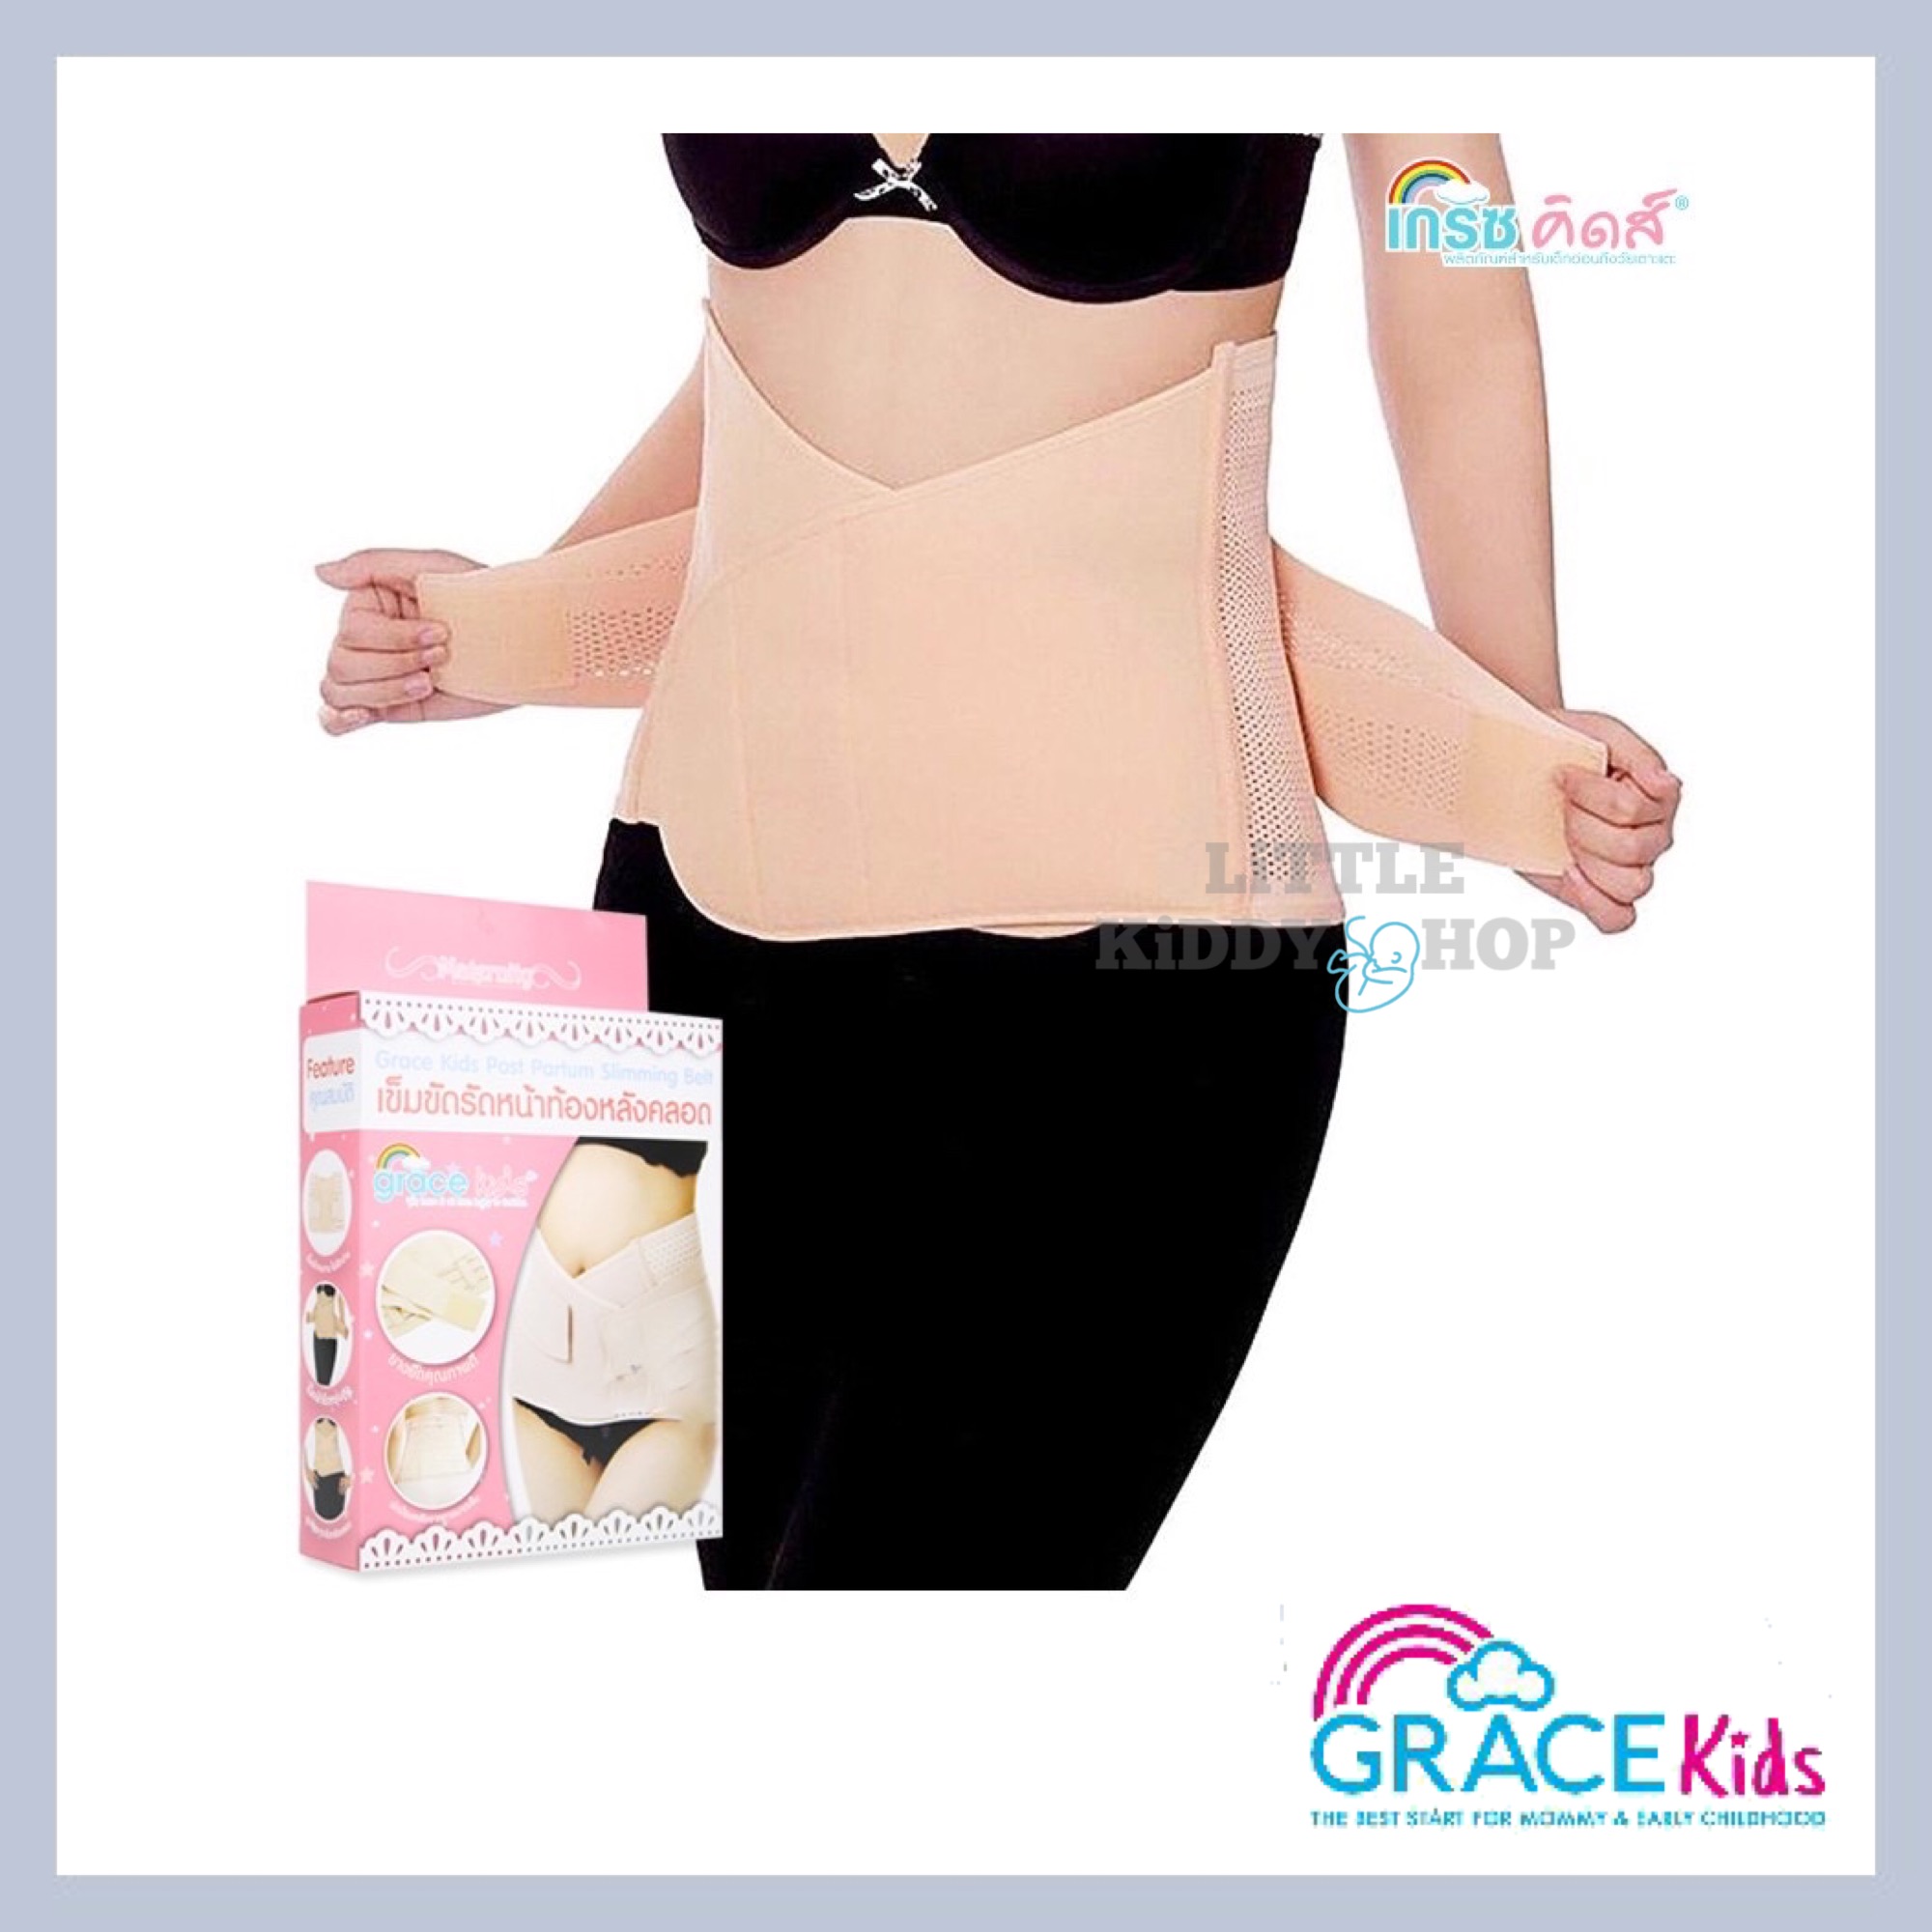 [Size M, L, XL] เข็มขัด สายผ้ารัดหน้าท้องหลังคลอด Grace kids [GKP]